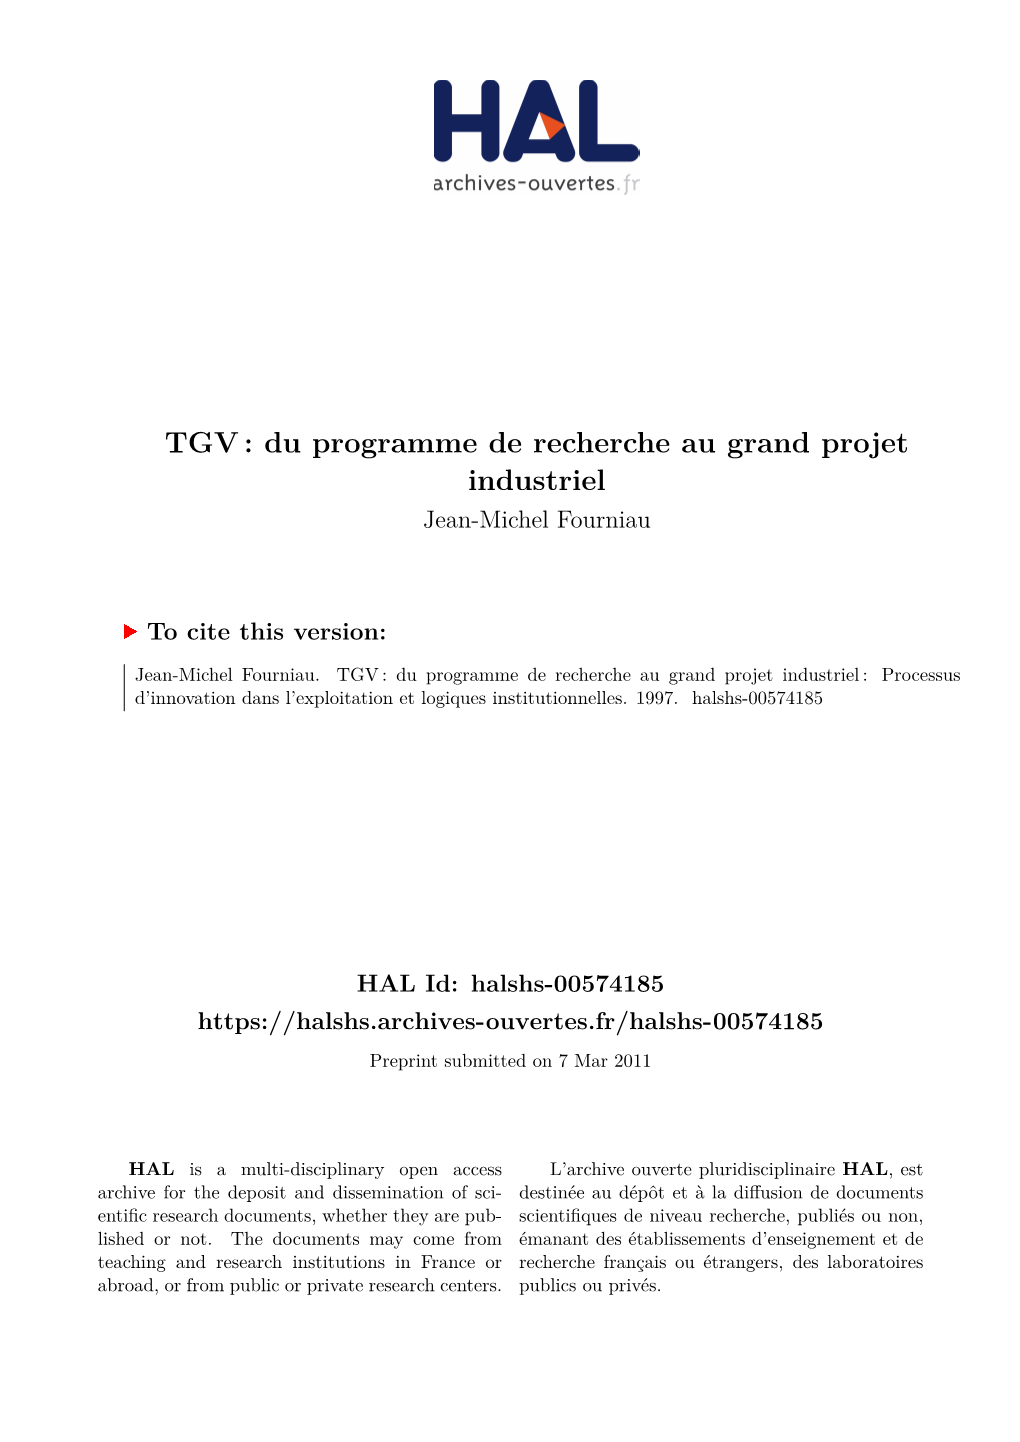 TGV : Du Programme De Recherche Au Grand Projet Industriel Jean-Michel Fourniau